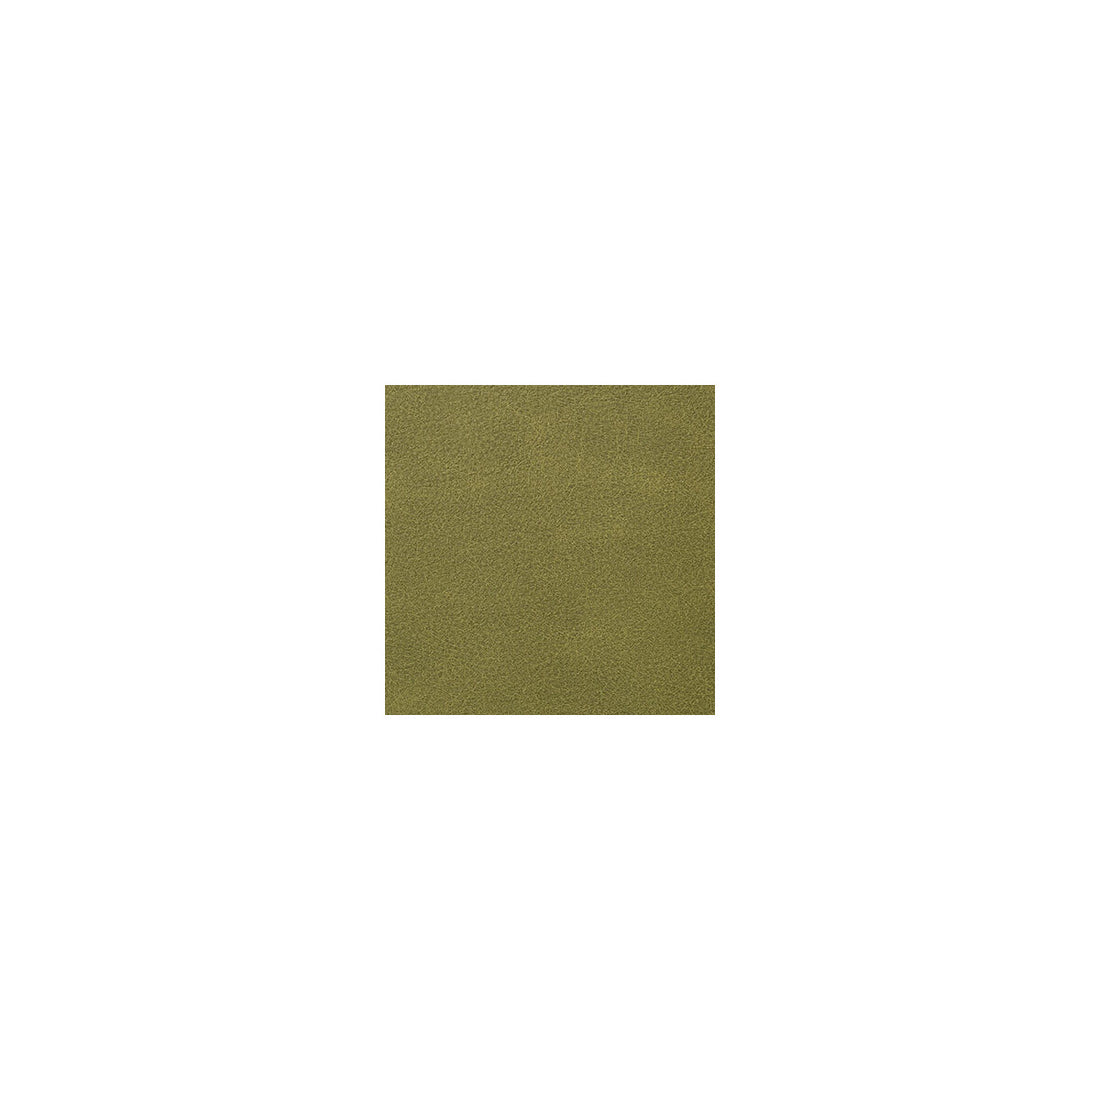 Overlook fabric in verde color - pattern OVERLOOK.3.0 - by Kravet Contract in the Sta-Kleen collection